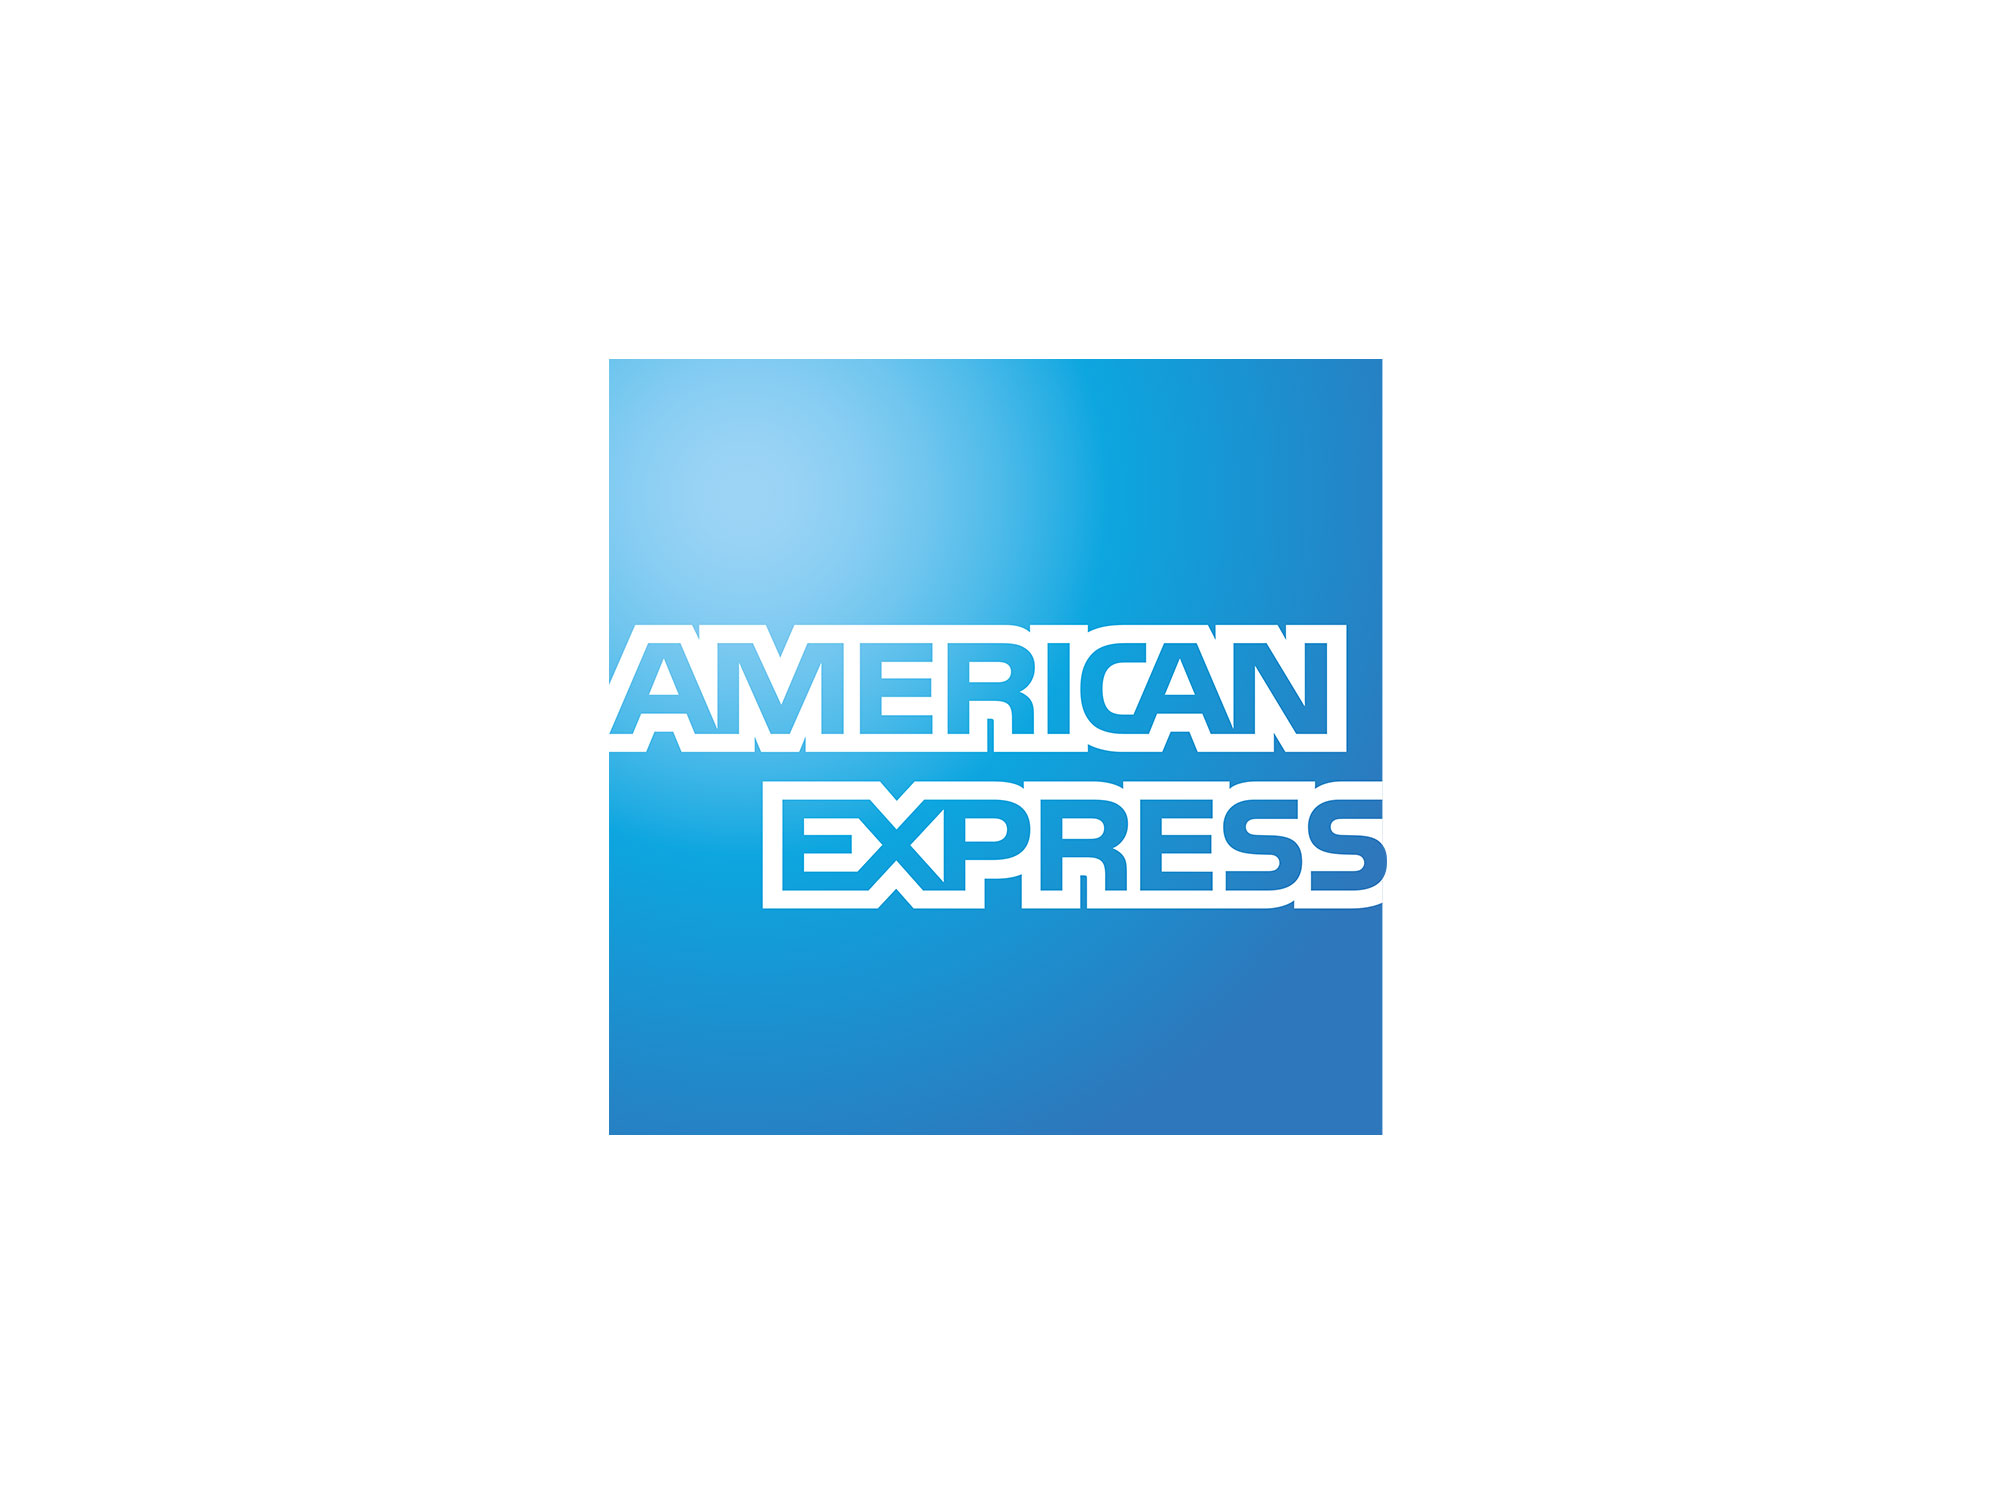 Express malaysia american Rewards